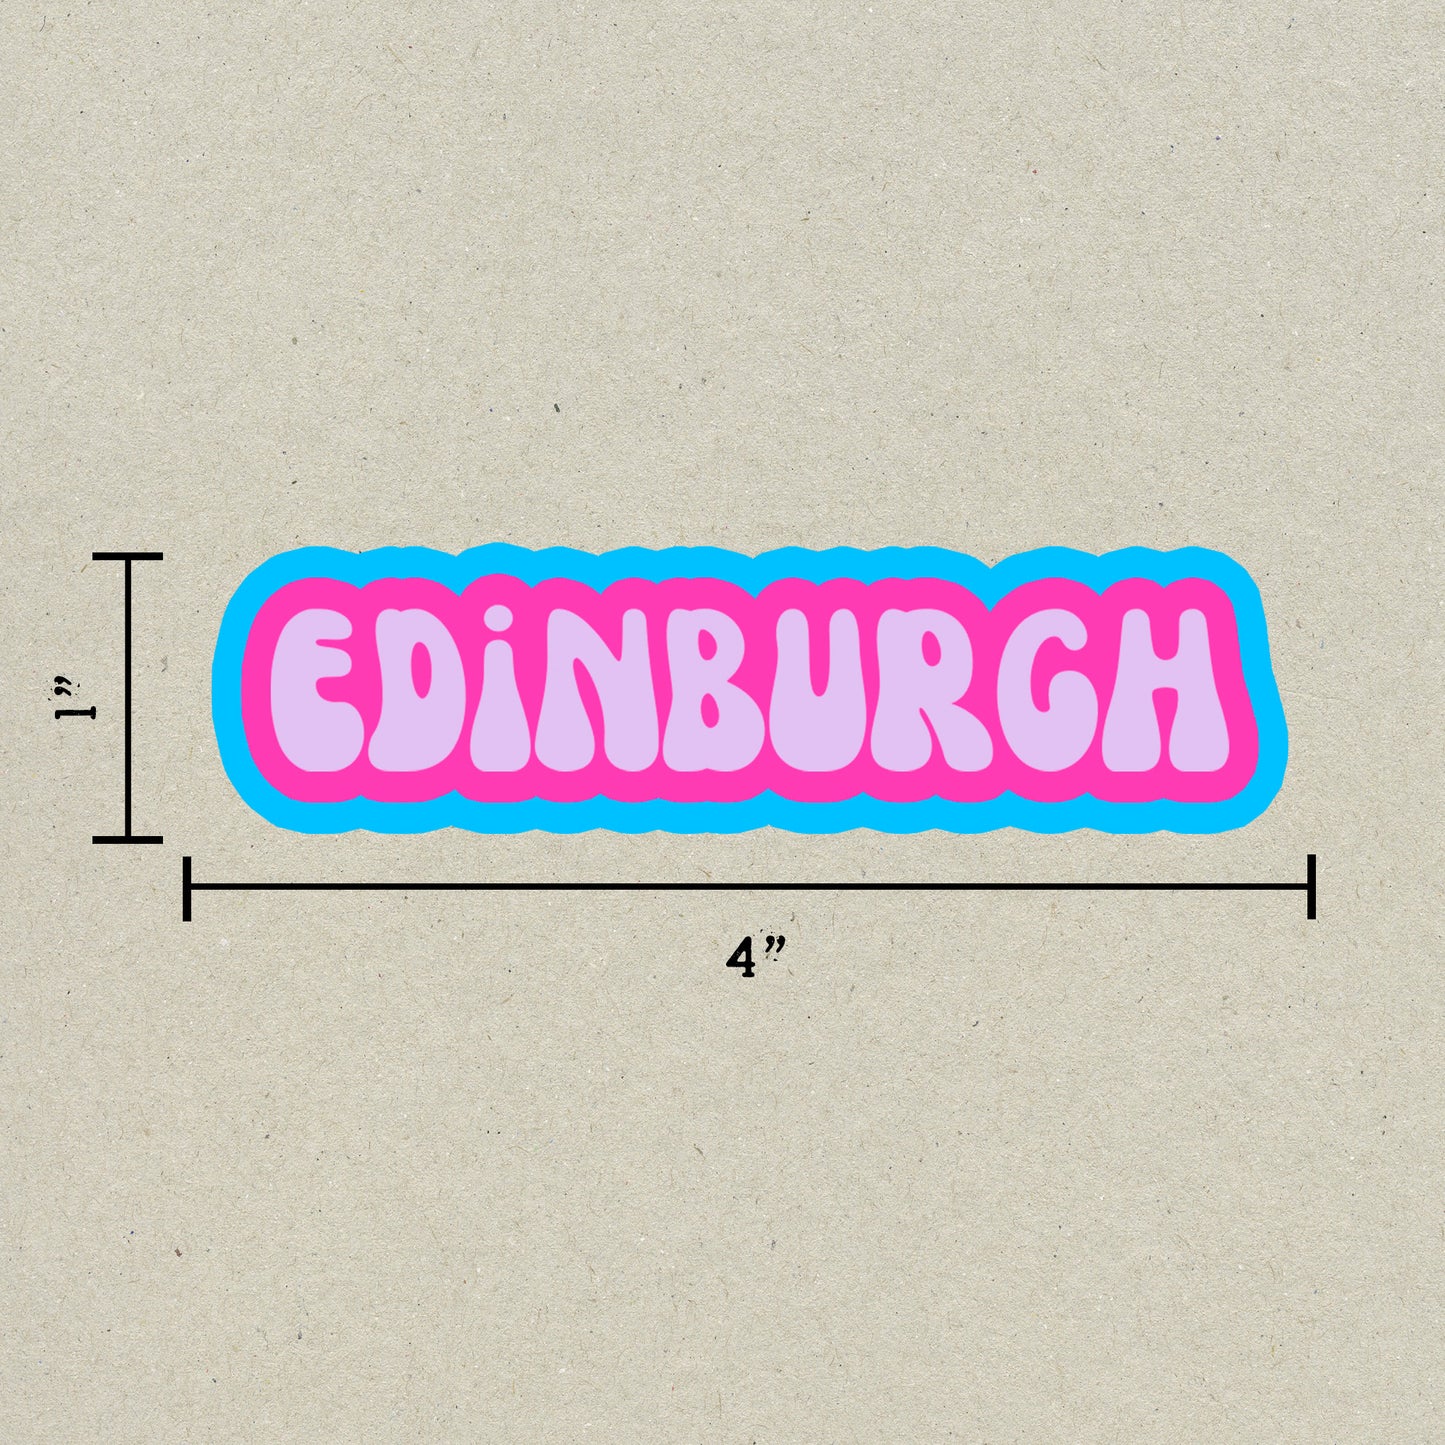 Edinburgh Cloud Sticker